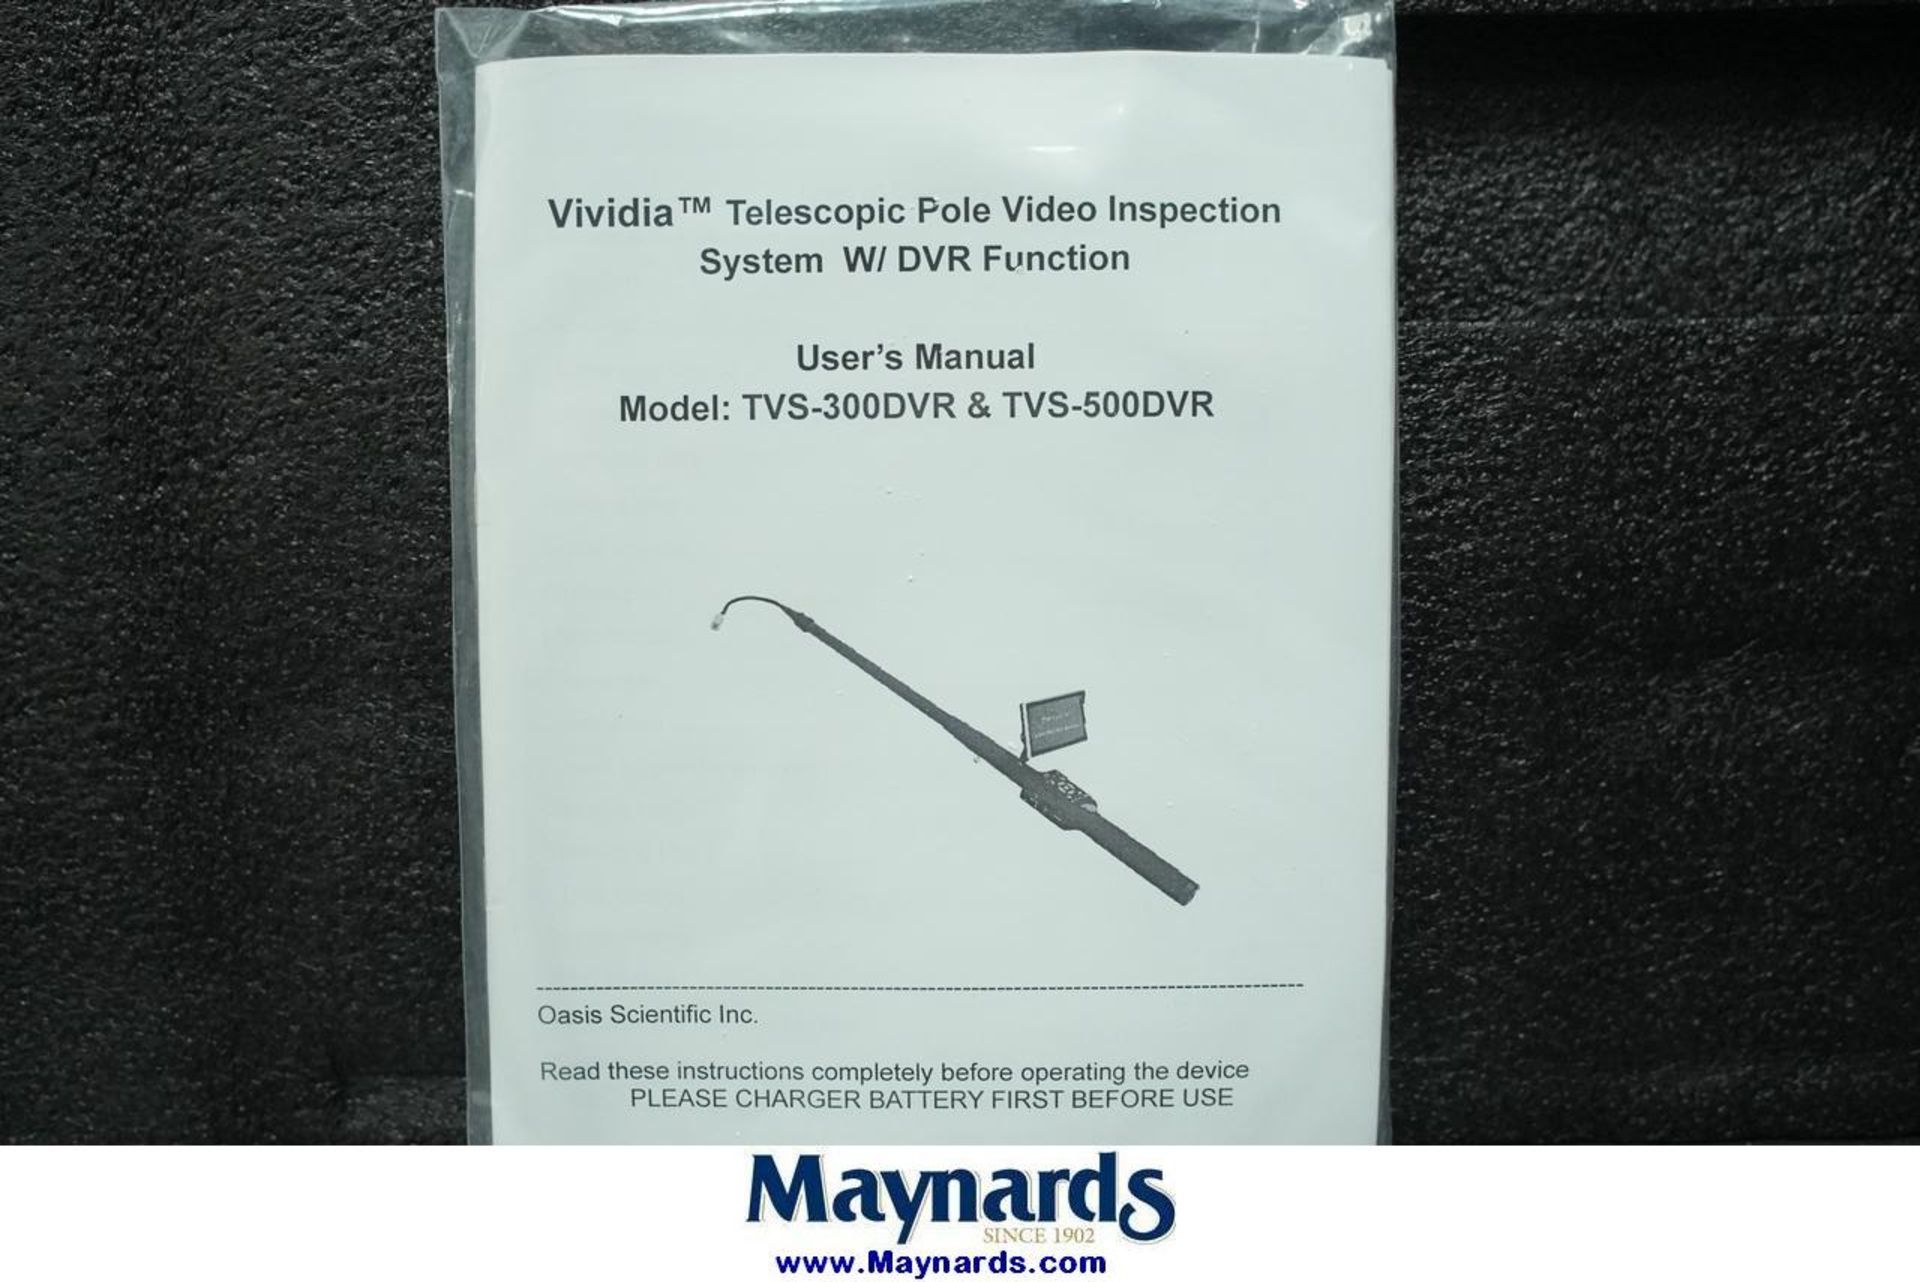 Vividia TVS-300DVR Telescopic Pole Video Inspection System - Image 2 of 6